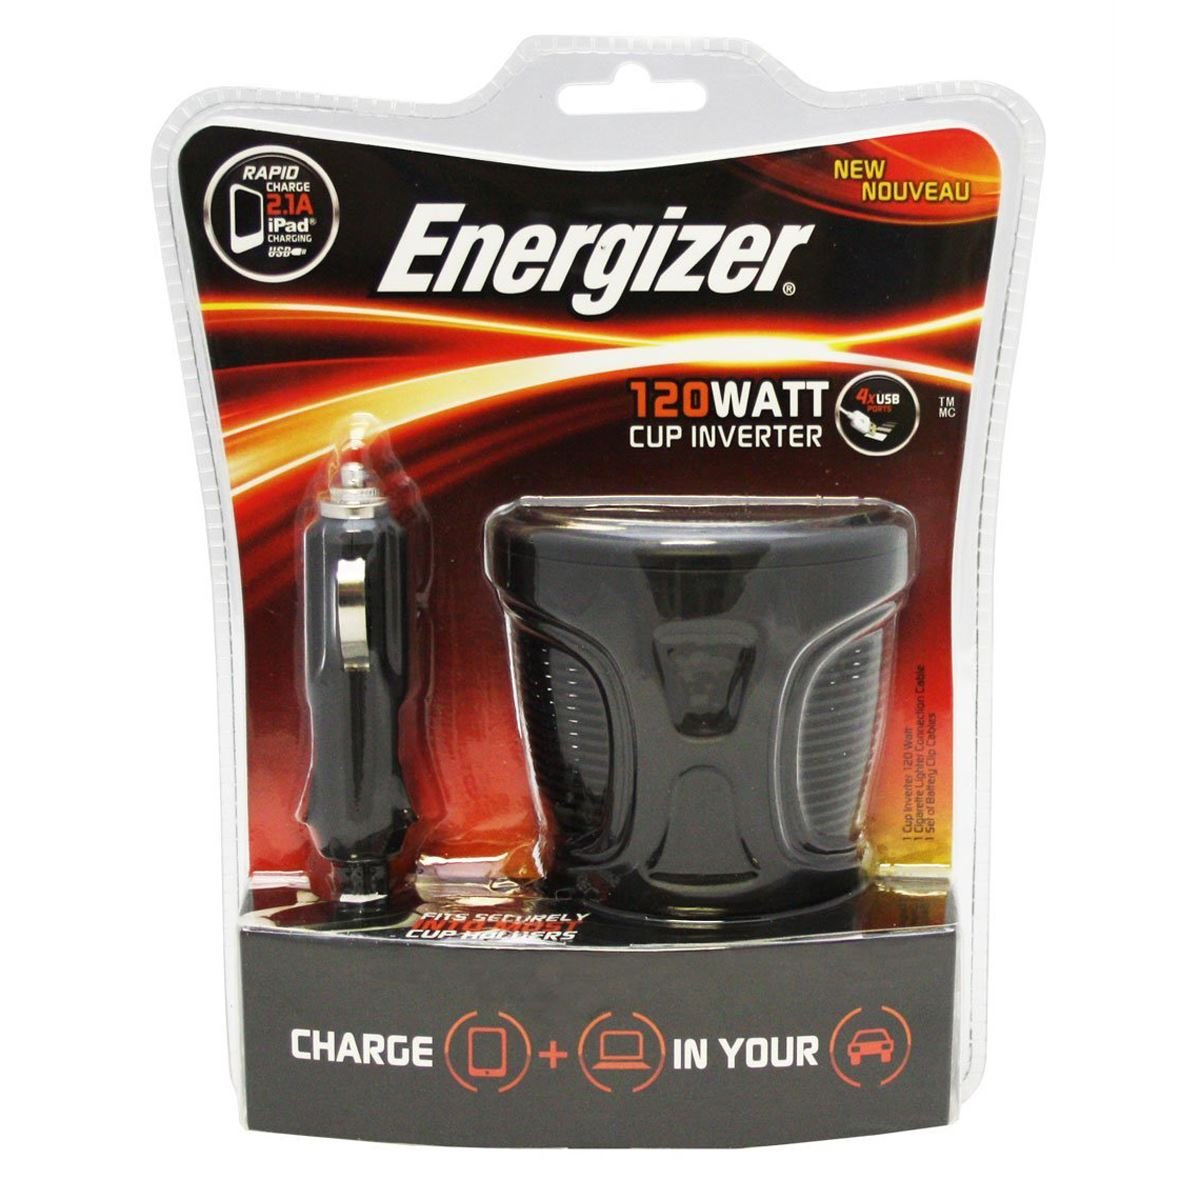 Cargador Energizer para Auto 4USB 120 watt